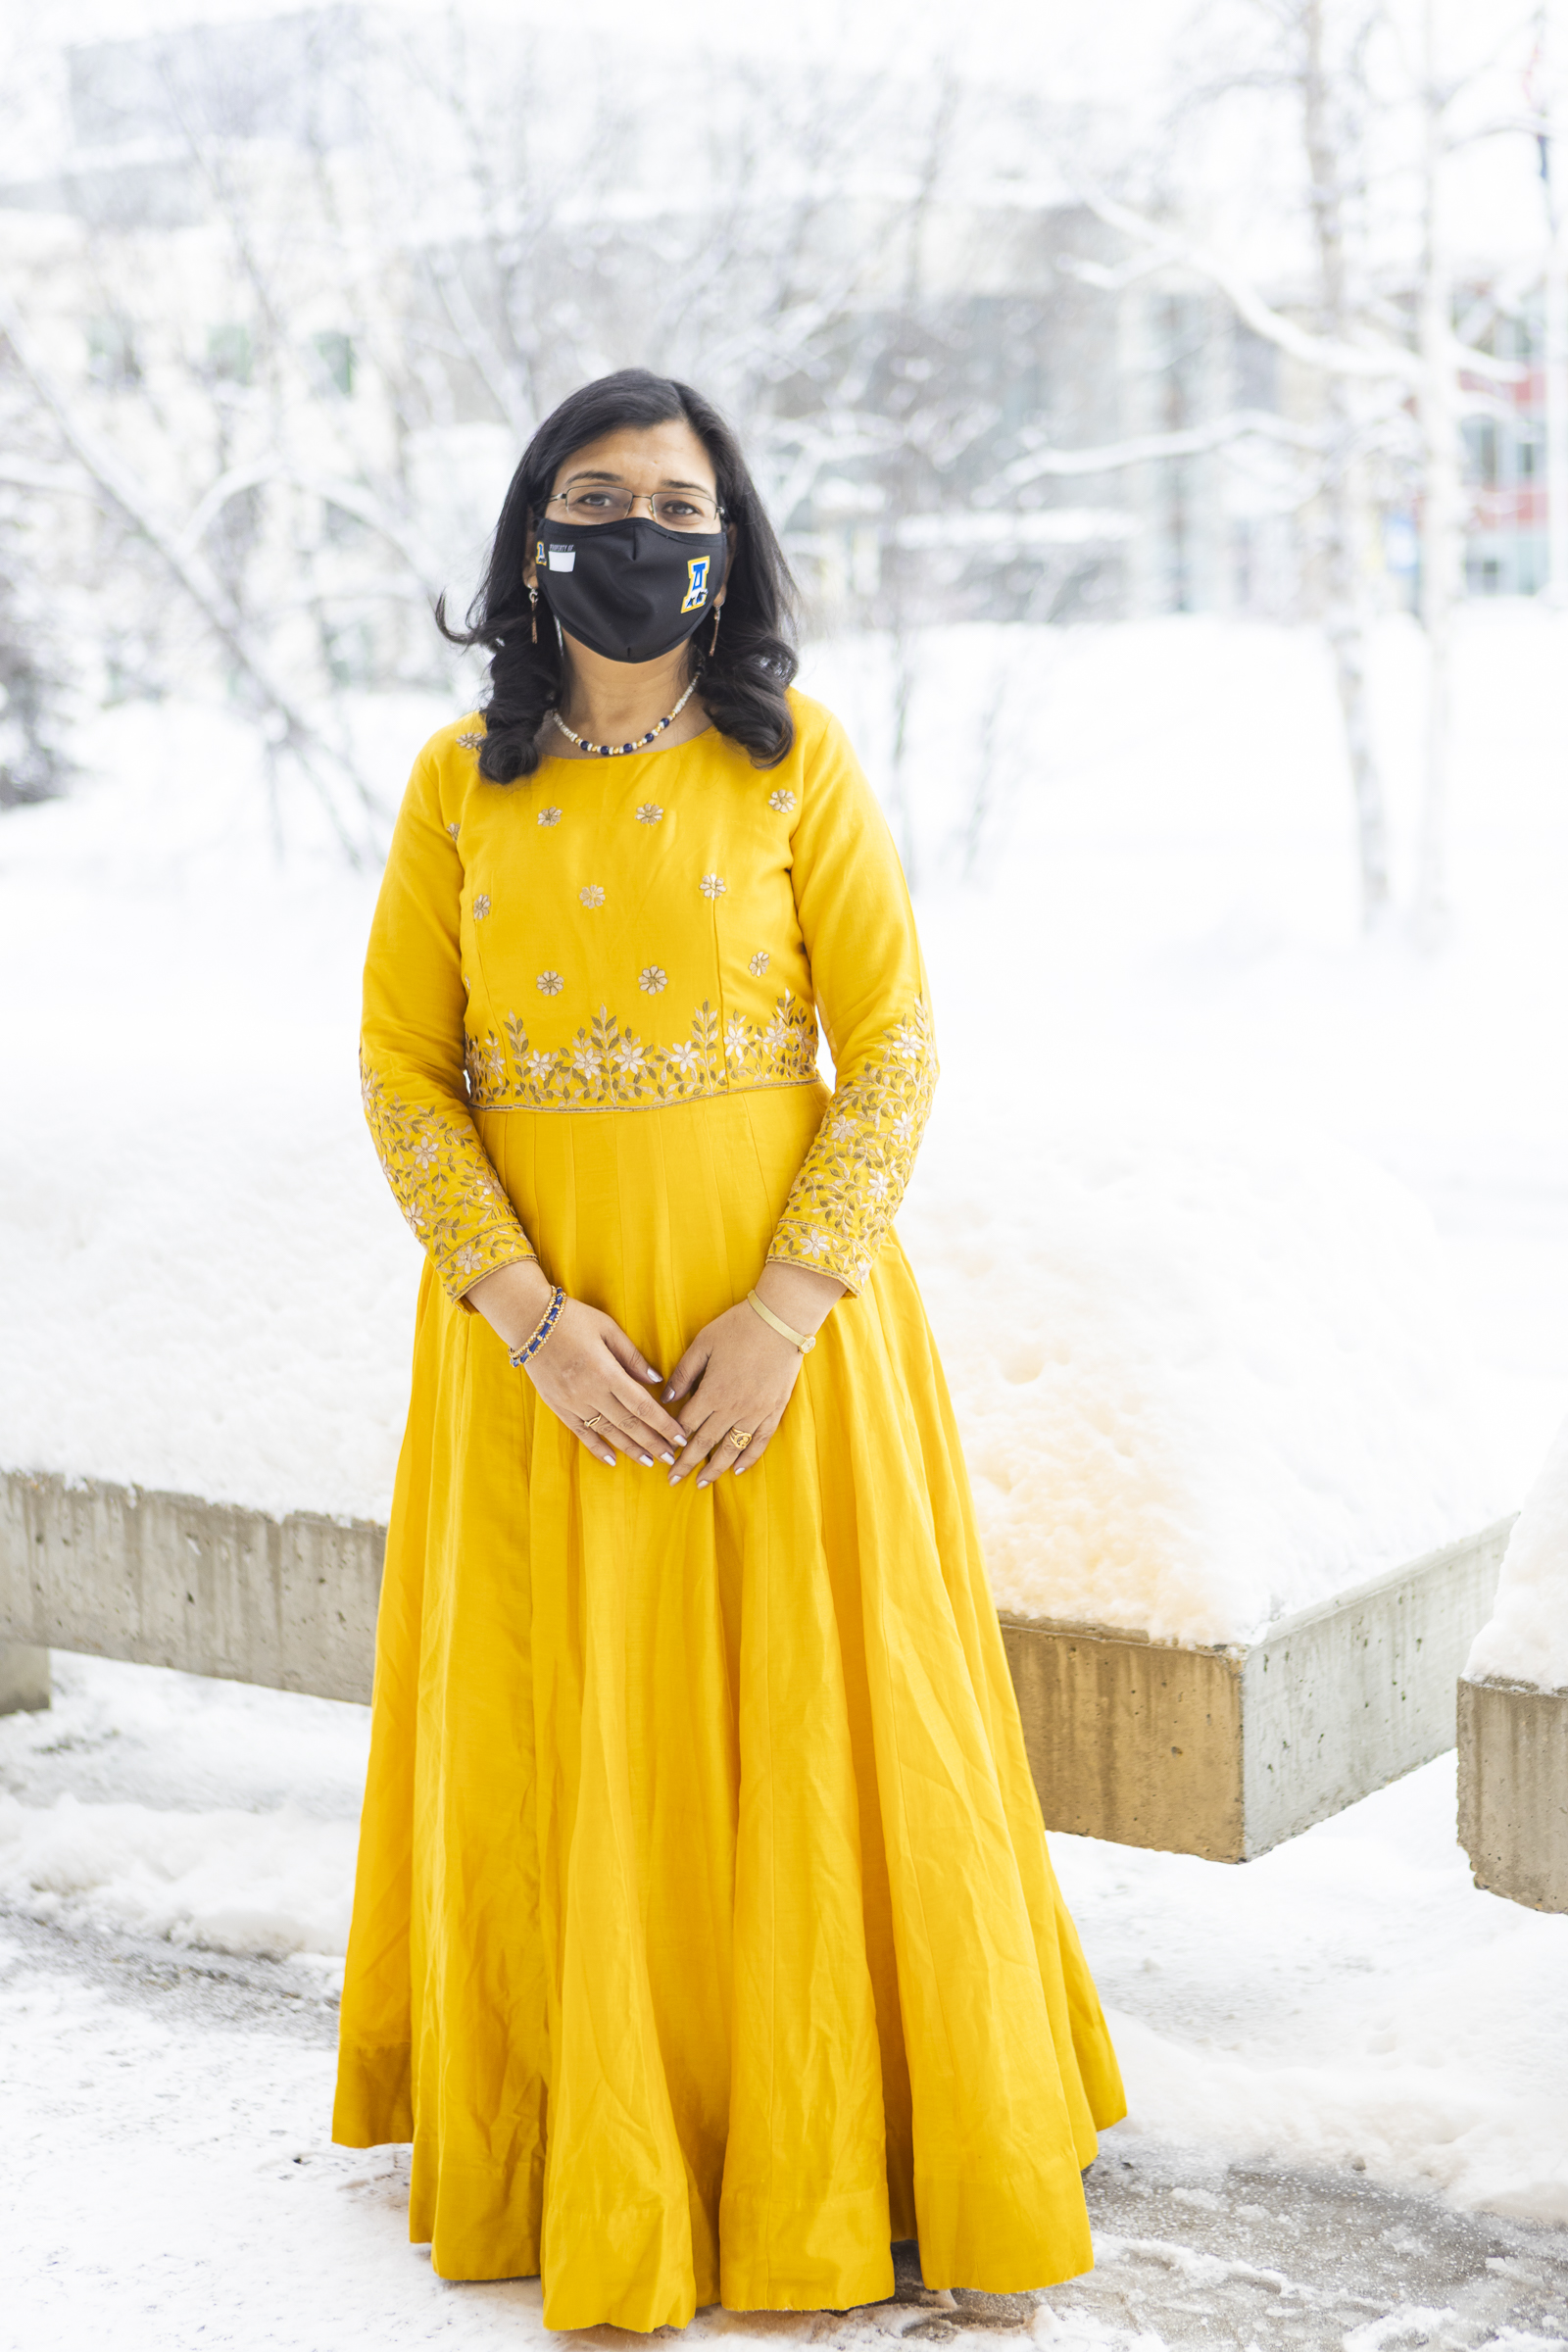 Anupma Prakash wearing a mask and gold dress